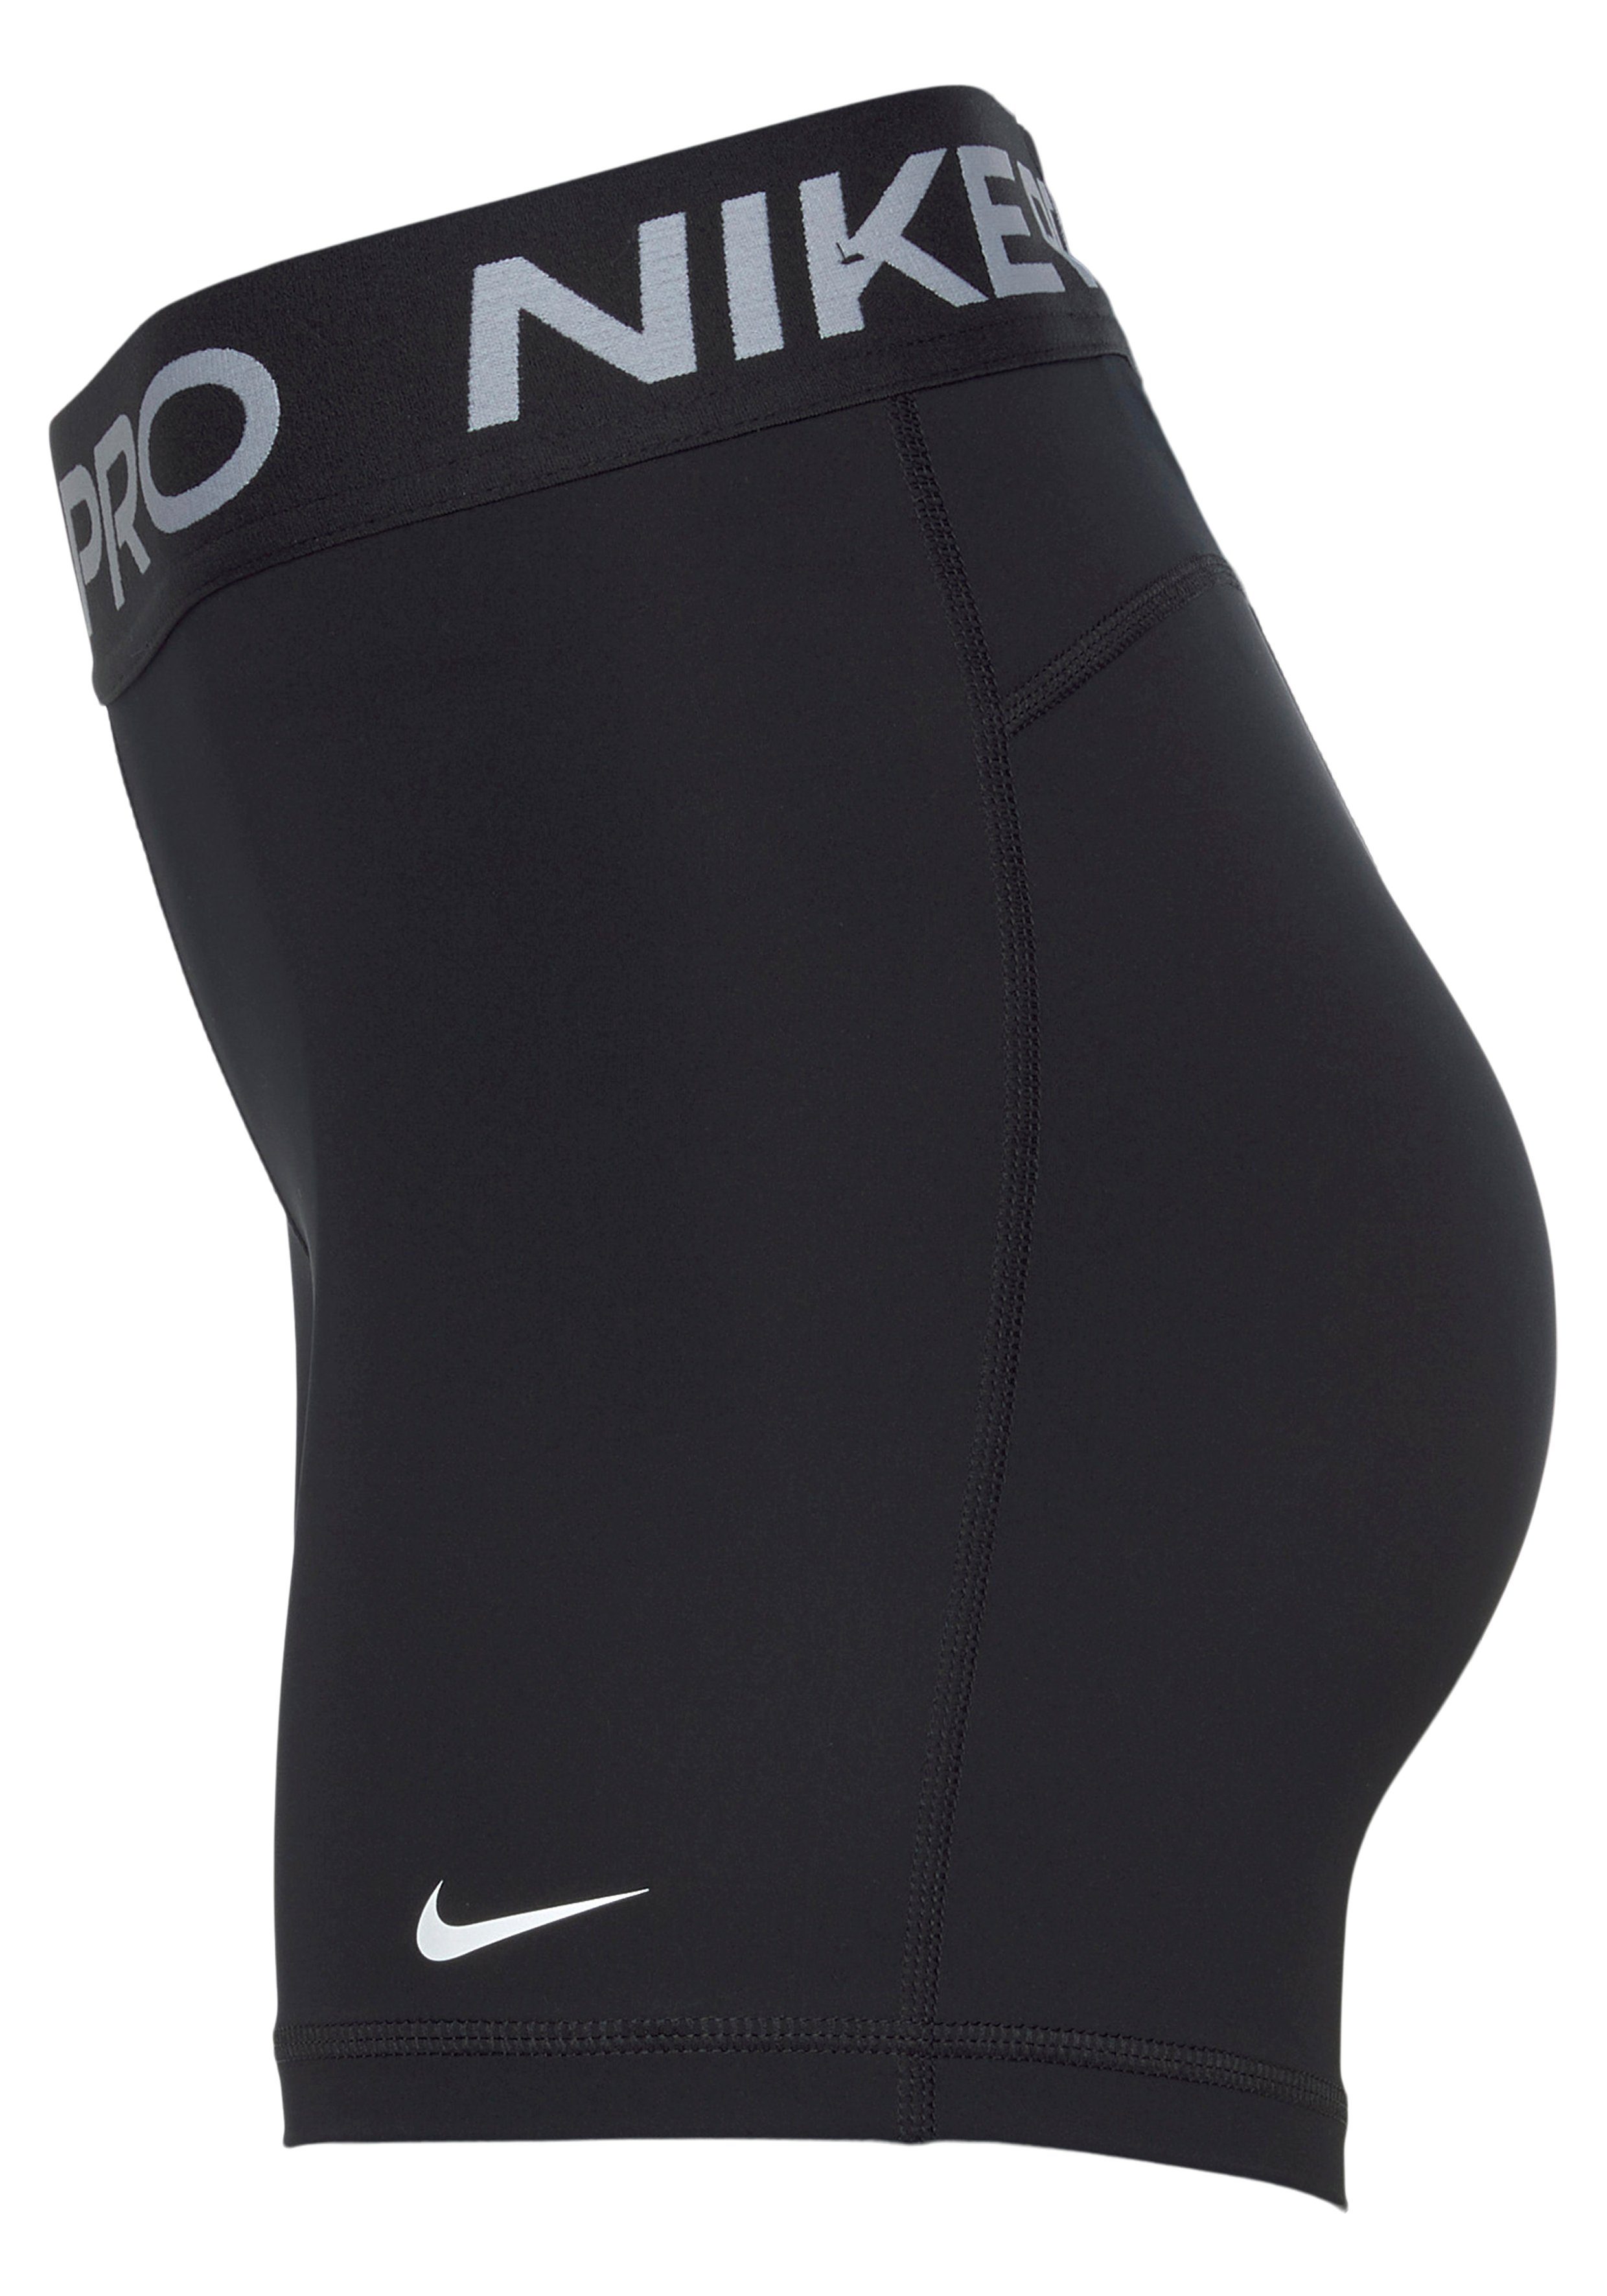 Nike PRO WOMEN'S Trainingstights schwarz SHORTS